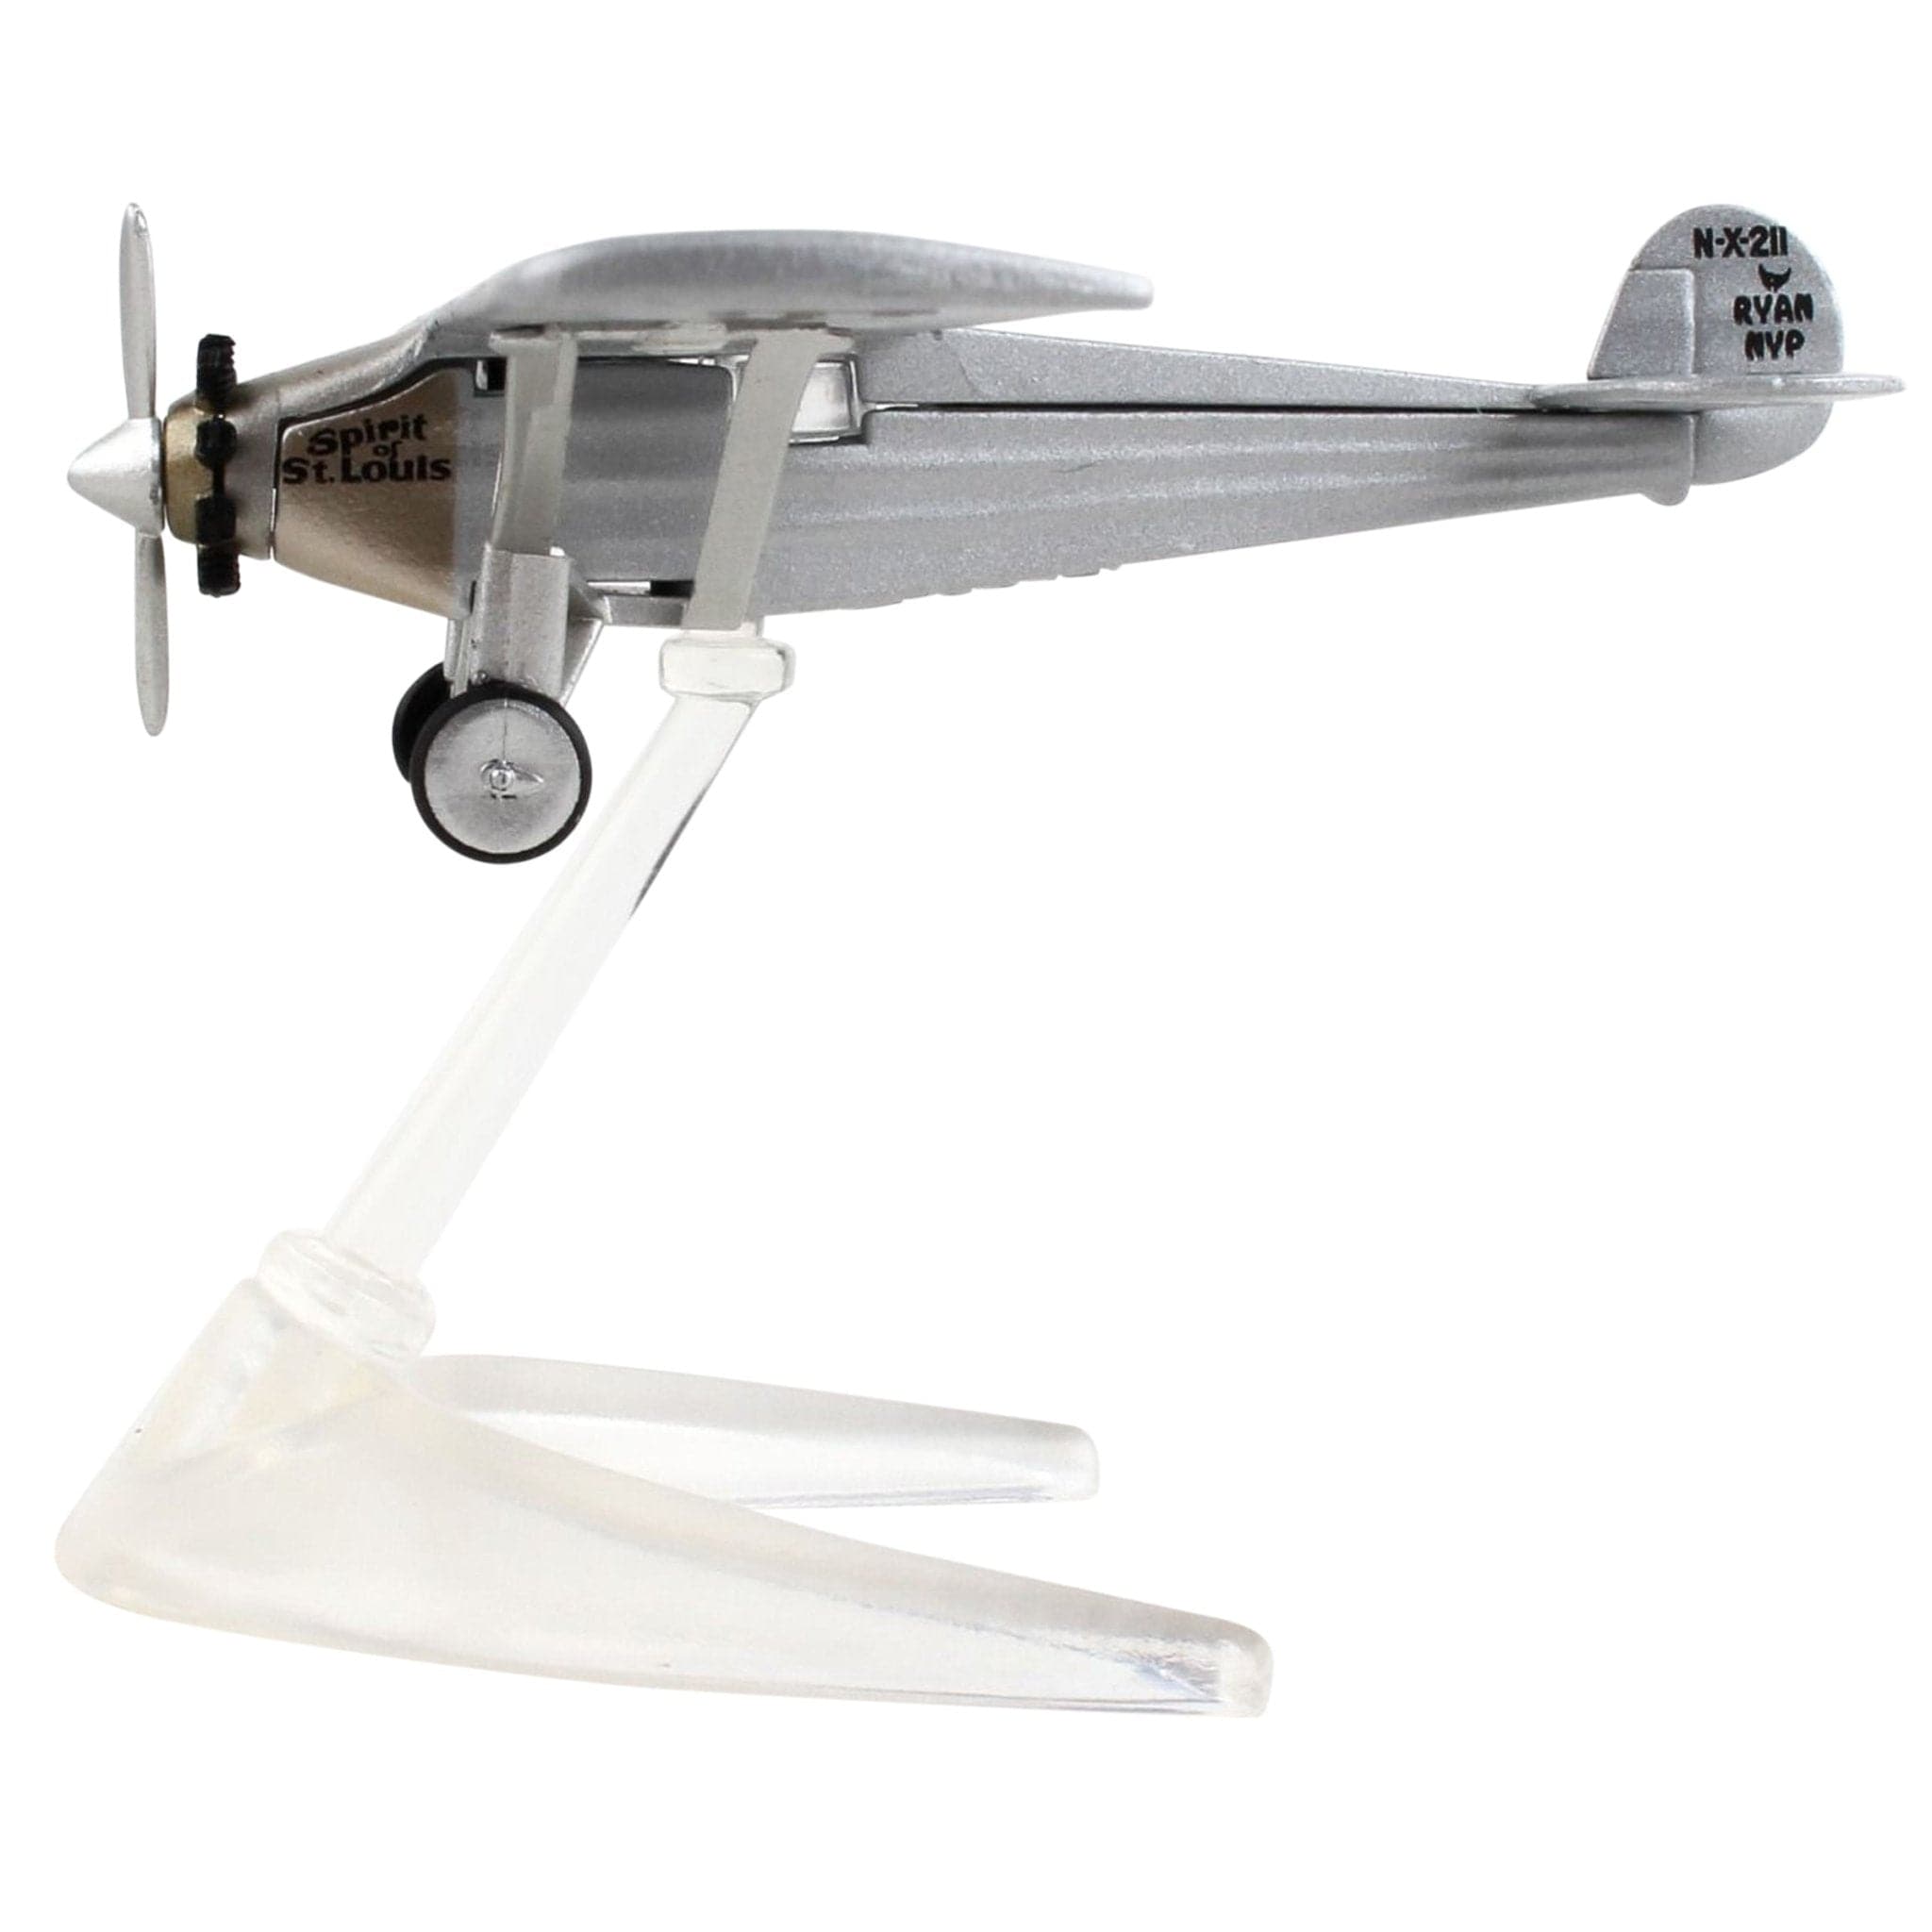 Corgi Spirit Of St Louis Smithsonian Die-Cast Metal Model Aircraft - PilotMall.com